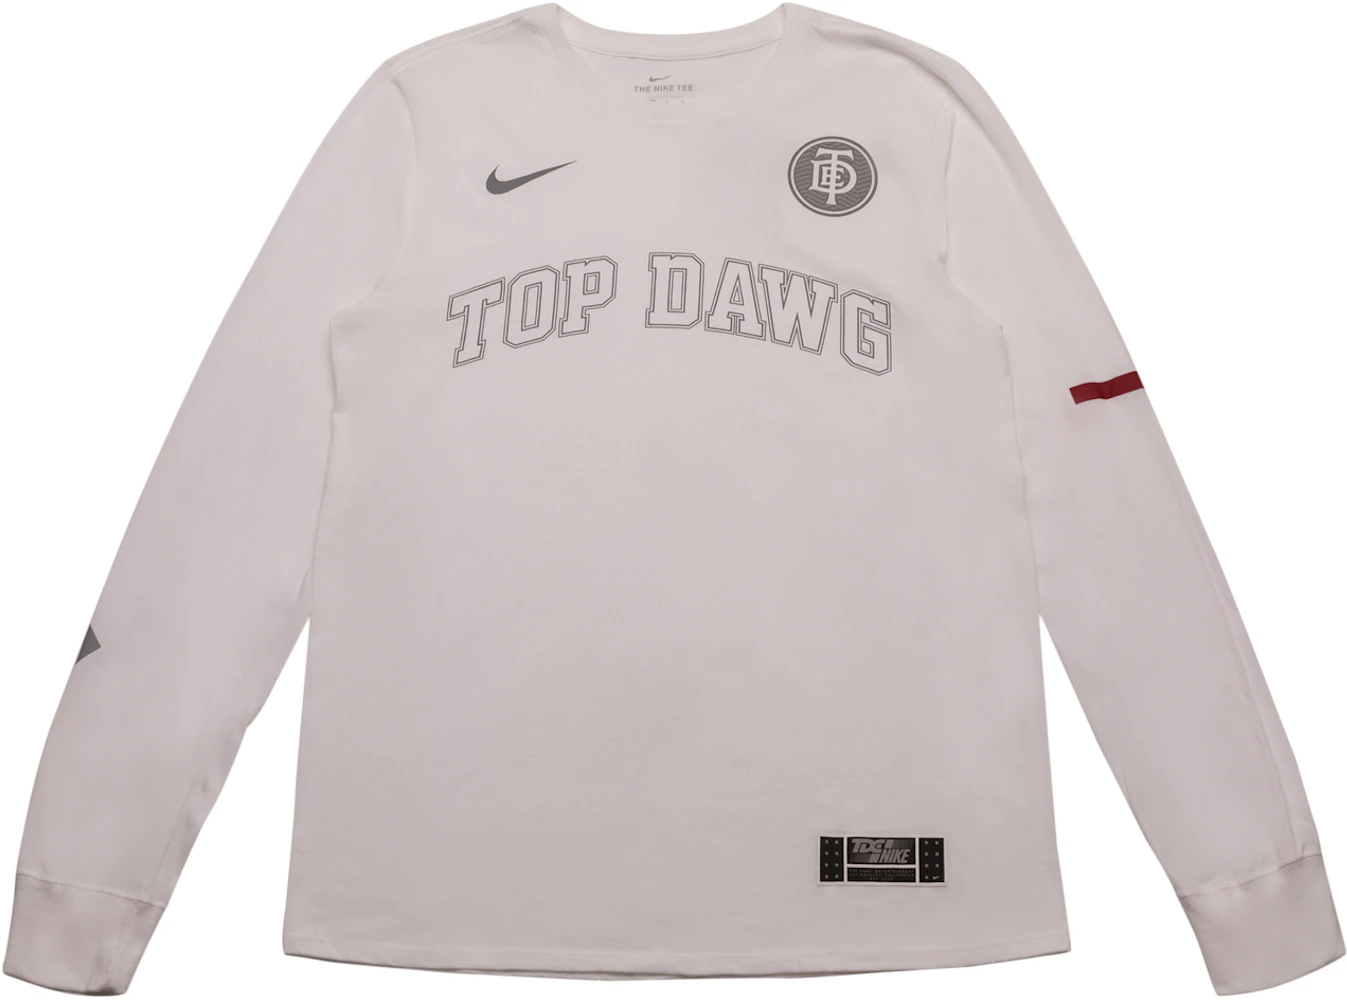 Nieuwheid pik Neuken TDE x Nike Top Dawg Arc Long Sleeve TDE White - SS18 Men's - US